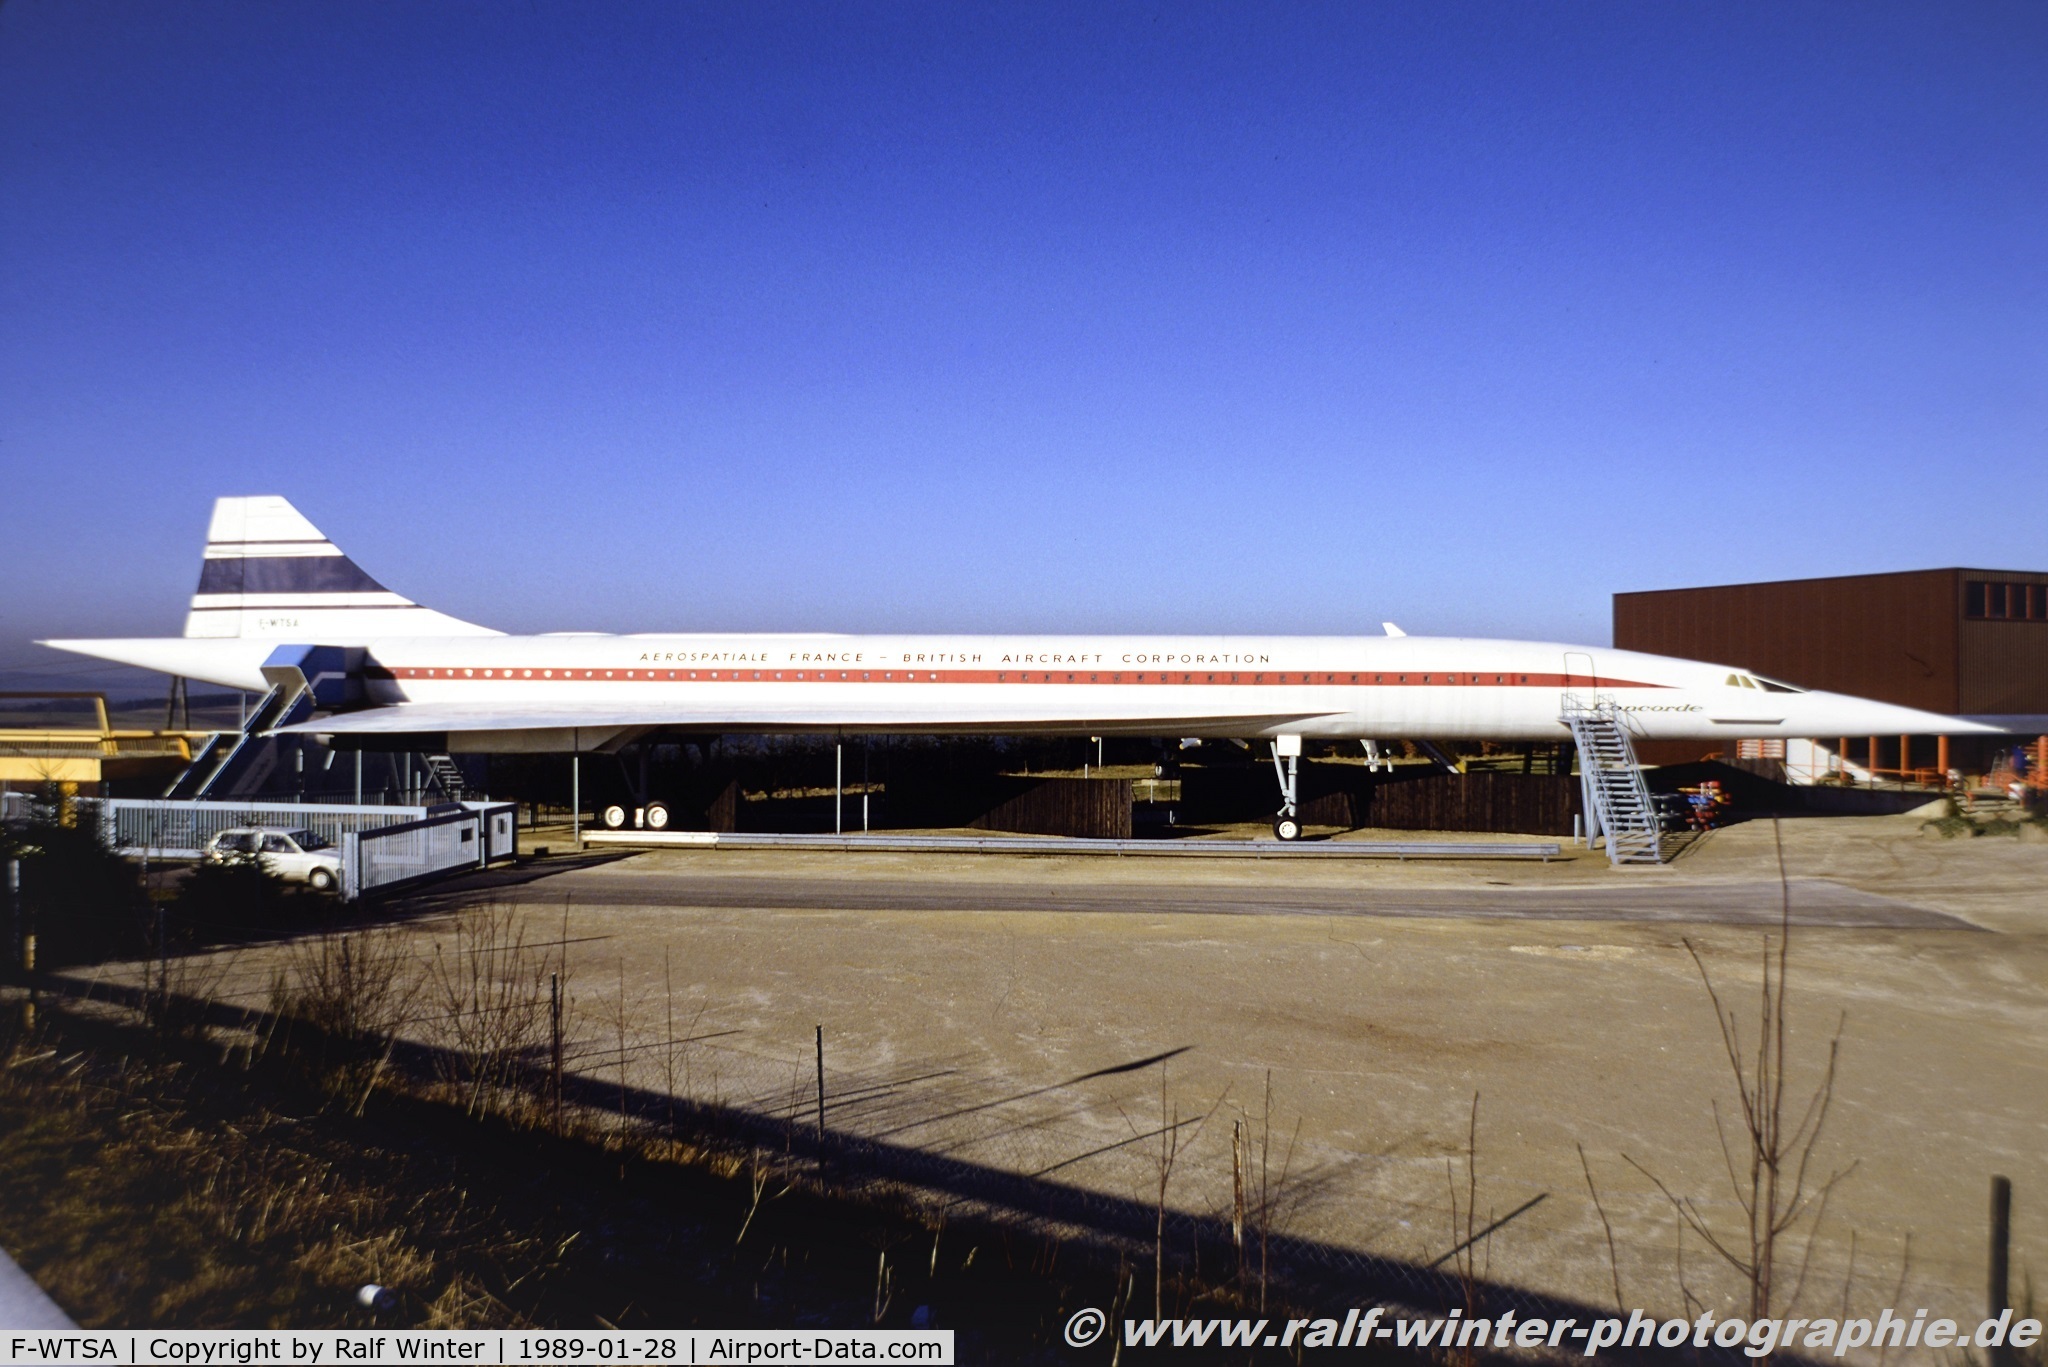 F-WTSA, 1973 Aerospatiale-BAC Concorde 101 C/N 02, Aerospatiale-BAC Concorde 101 - Aerospaciale France British Aircraft Cooperation - 02 - F-WTSA - 28.01.1989 - Hermeskeil